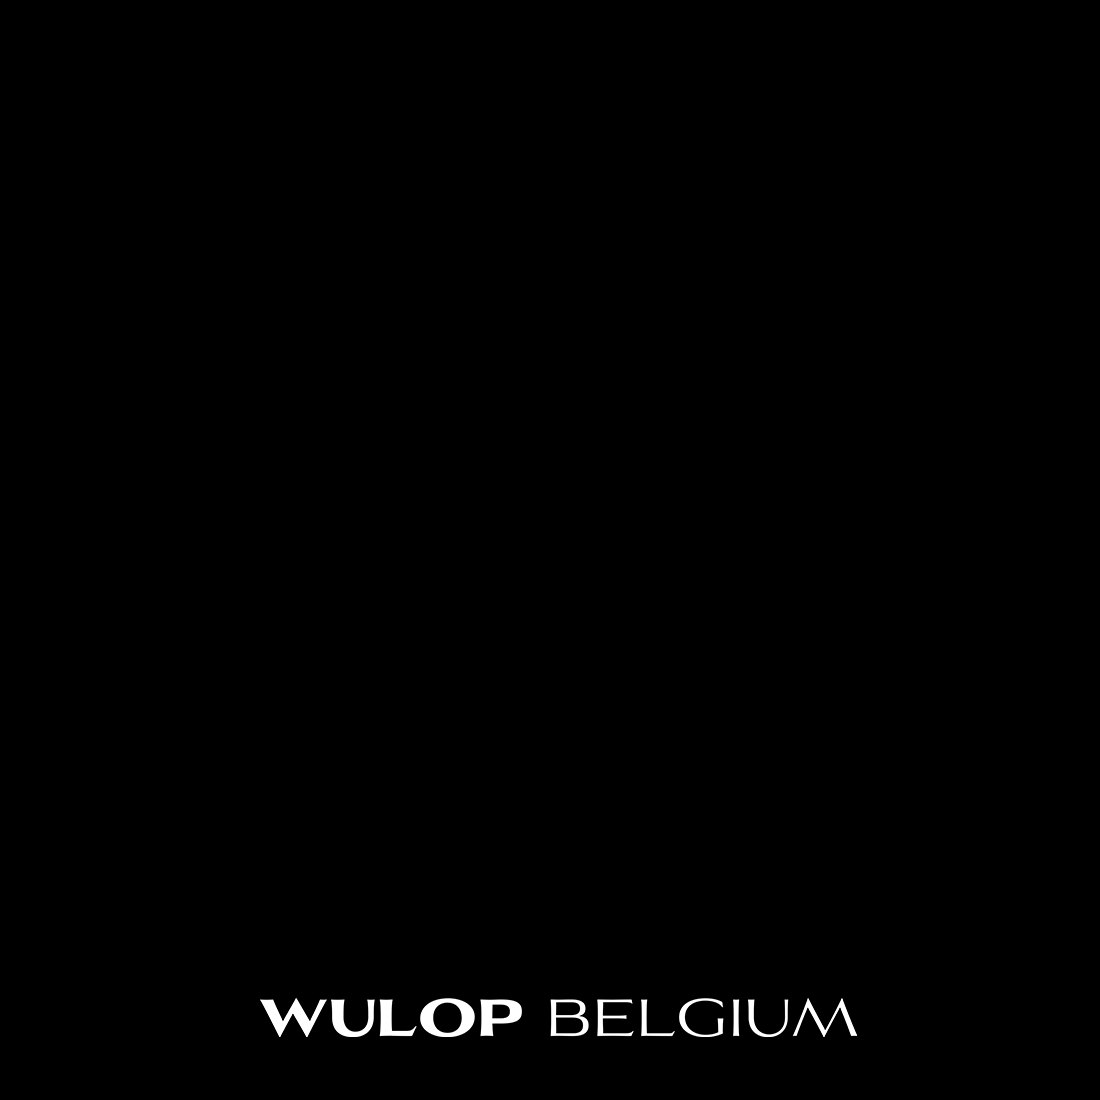 Wulop_Belgium.png